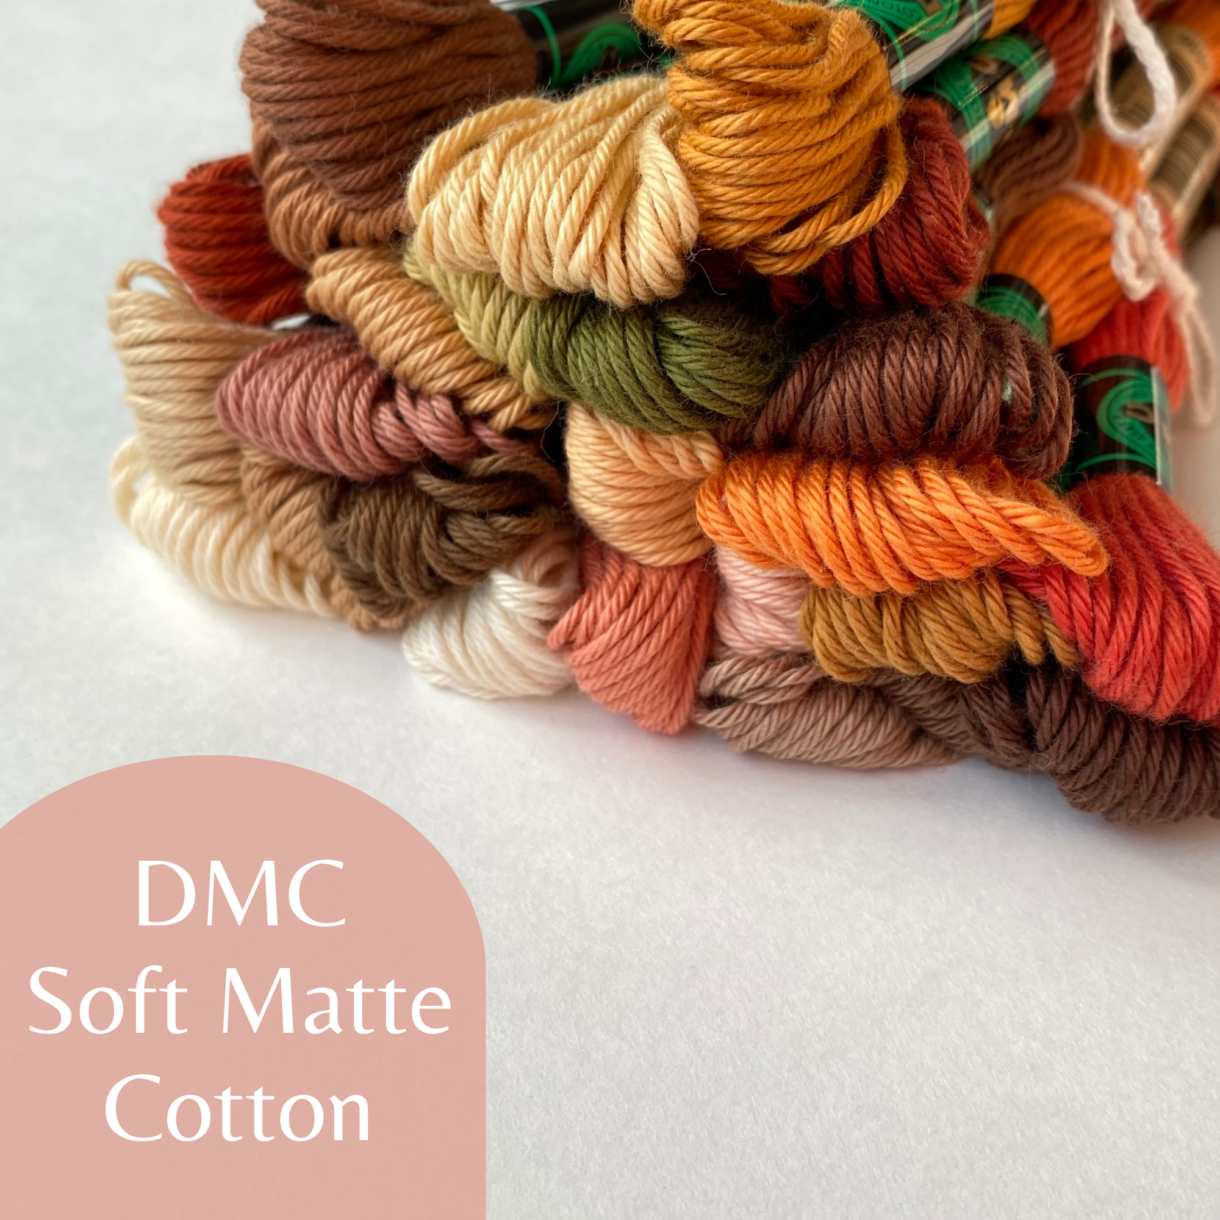 DMC Soft Matte Cotton Cover Page - Pelavida - Shop For Life